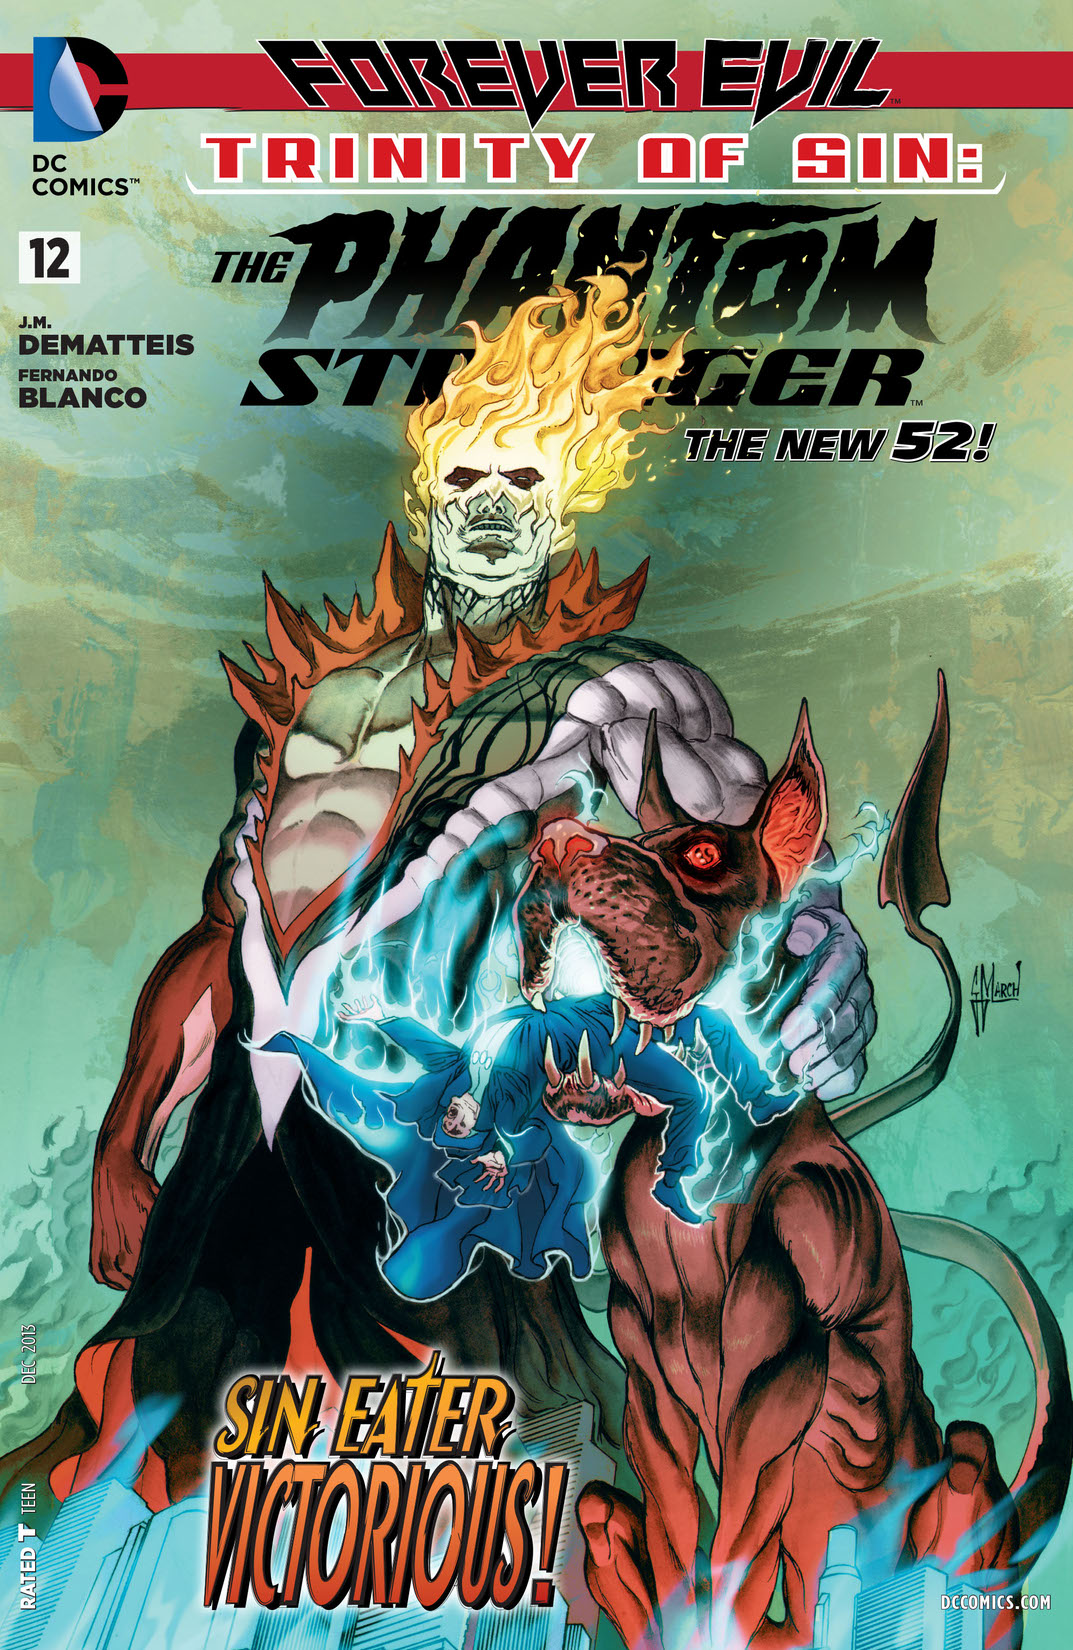 Trinity of Sin: The Phantom Stranger (2012-) #12 preview images